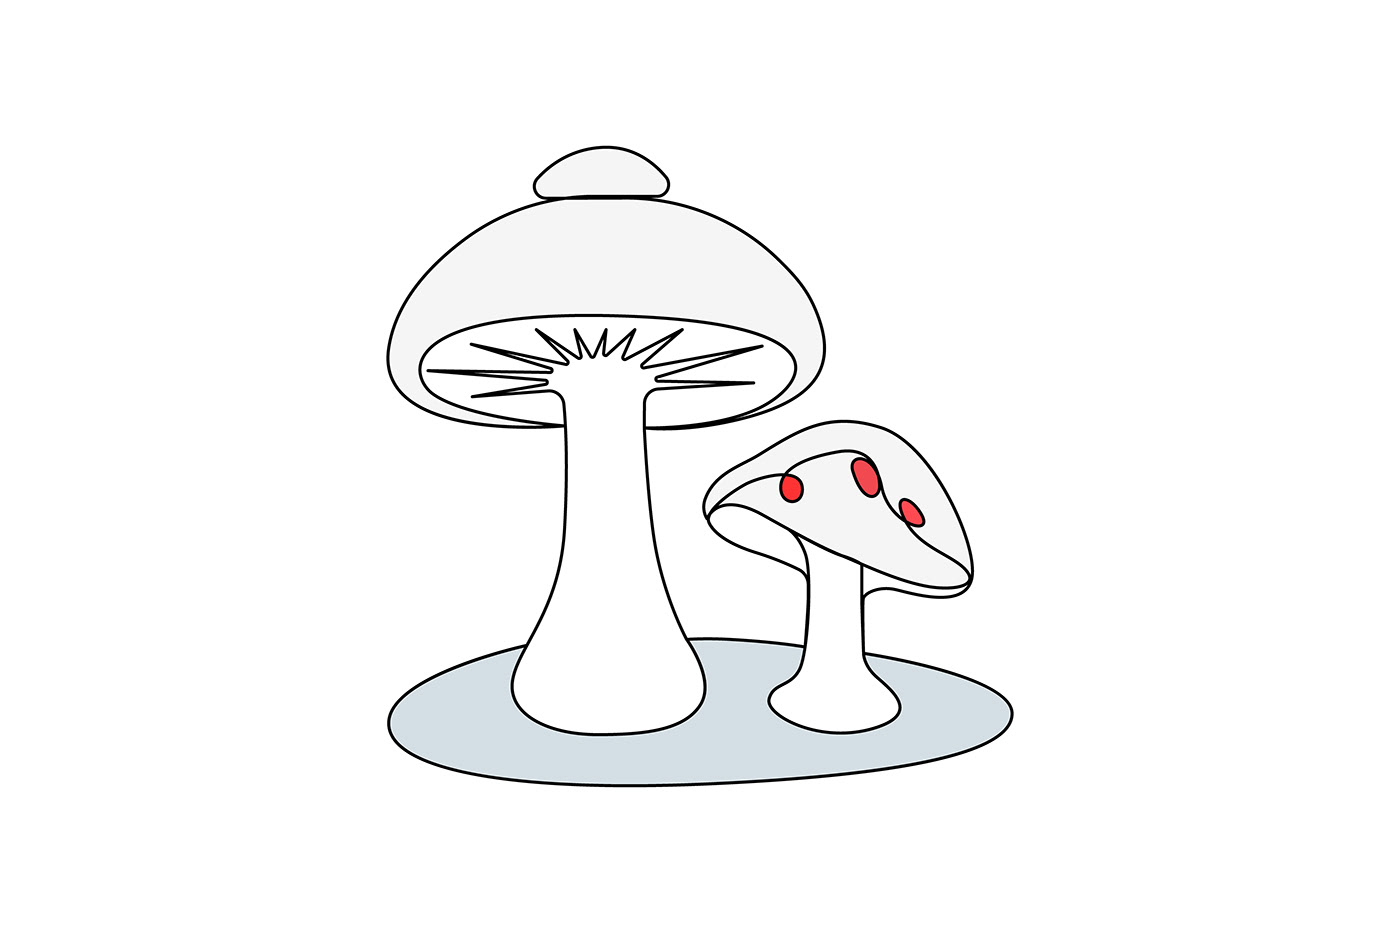 Digital Art  mushrooms illustration line art illustration line art Mushroom drawing drawing art illustration art continuous mushroom mushroom illustration mushroom single line